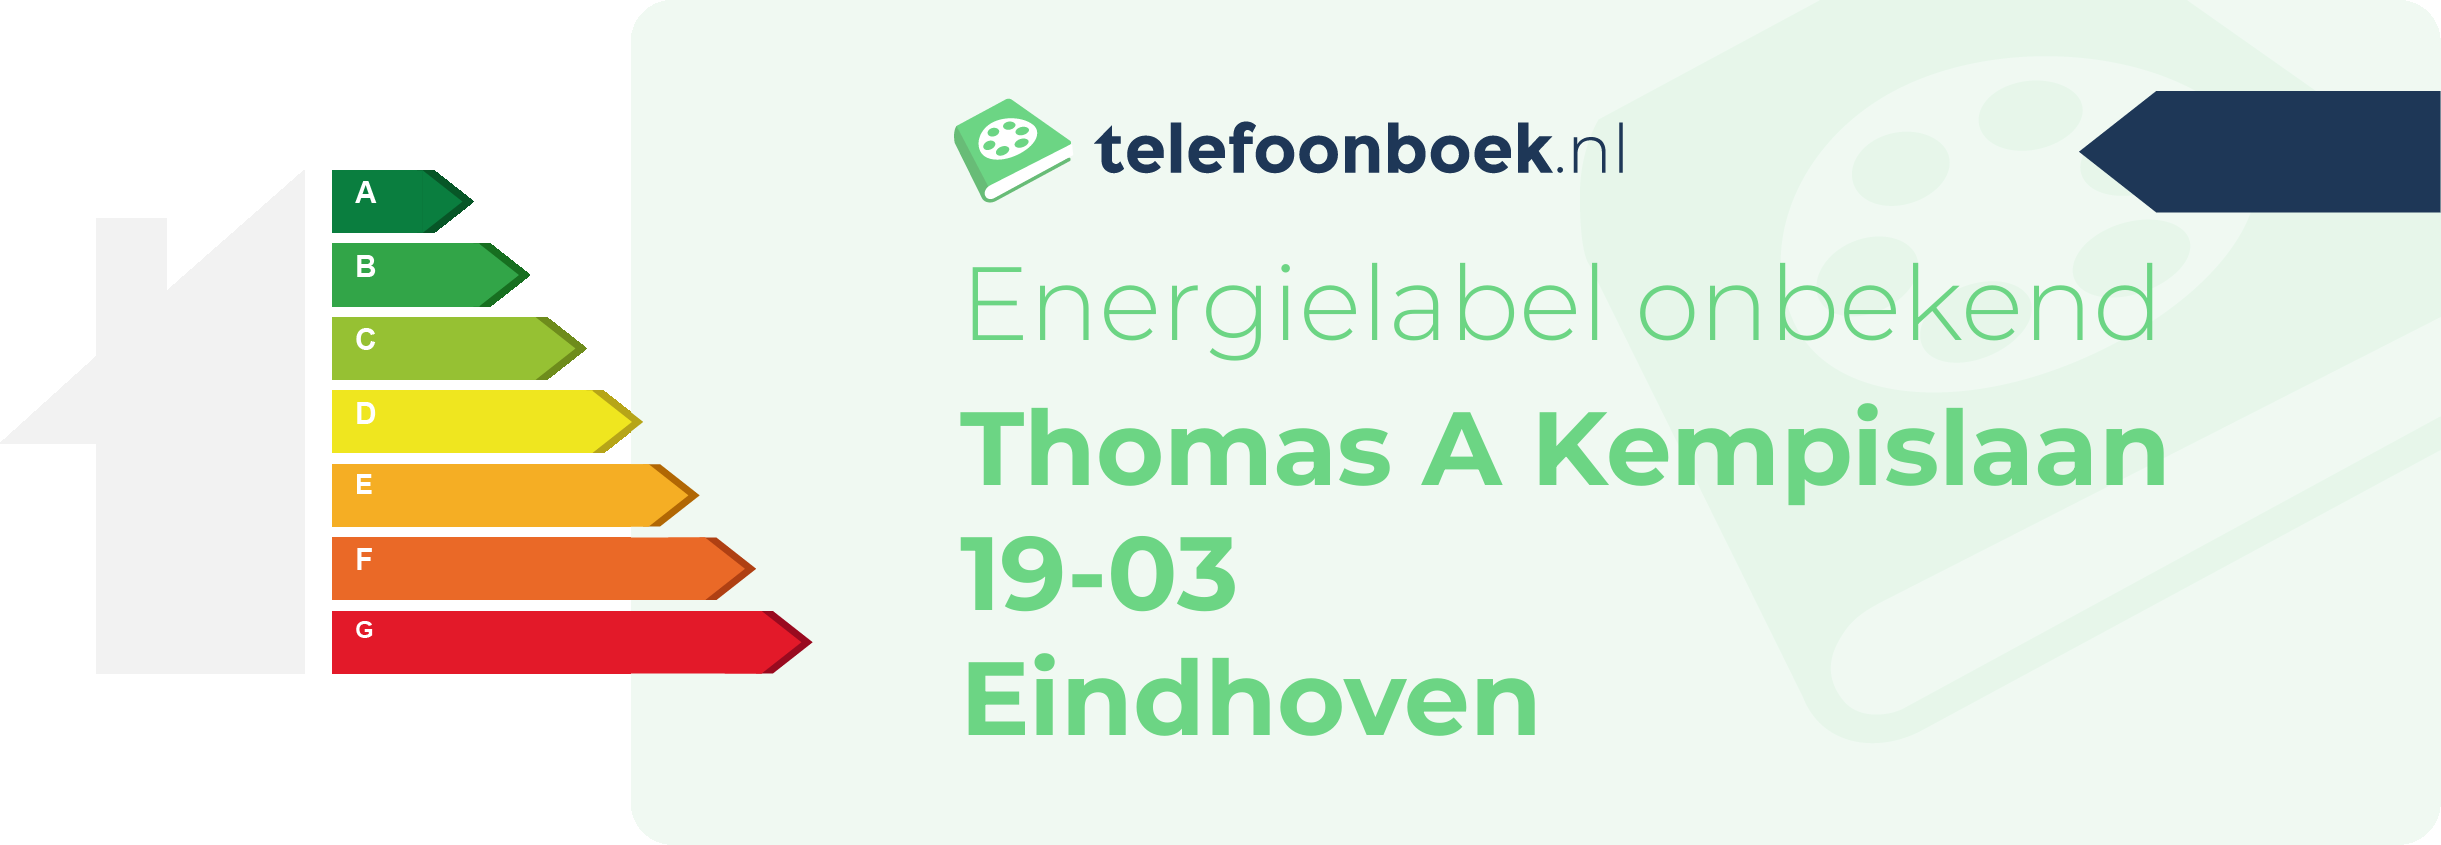 Energielabel Thomas A Kempislaan 19-03 Eindhoven